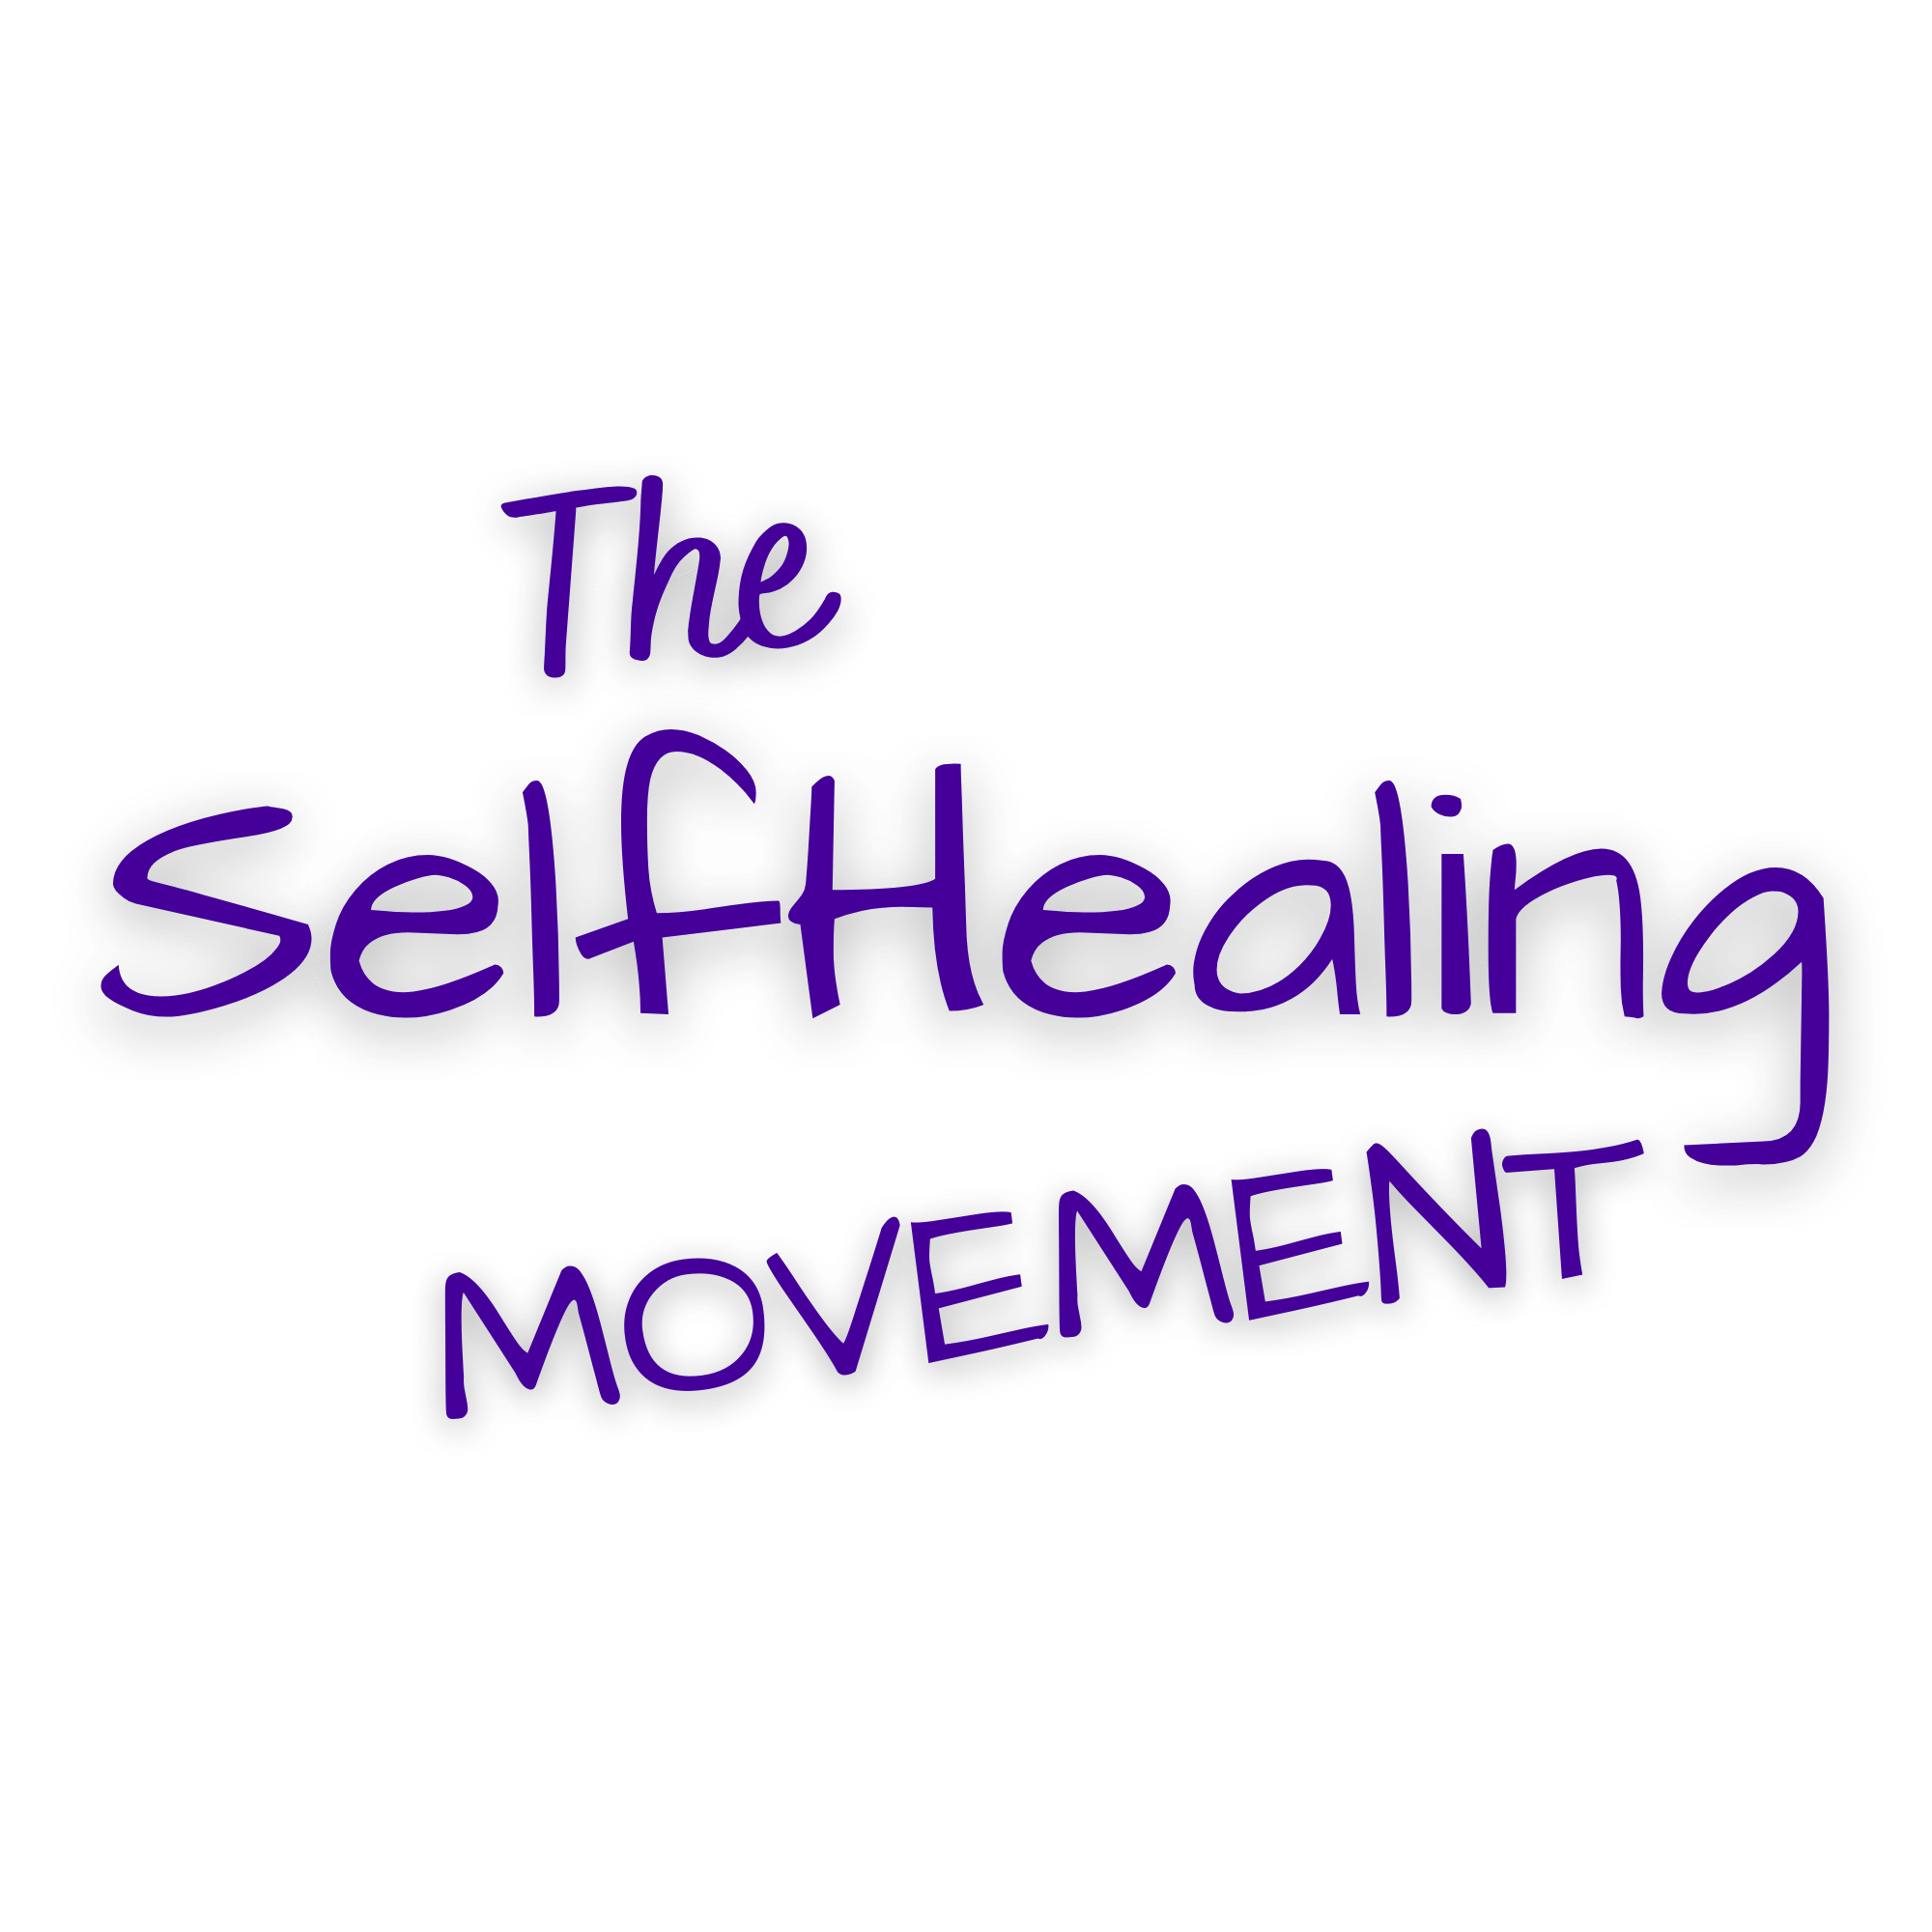 The SelfHealing Movement